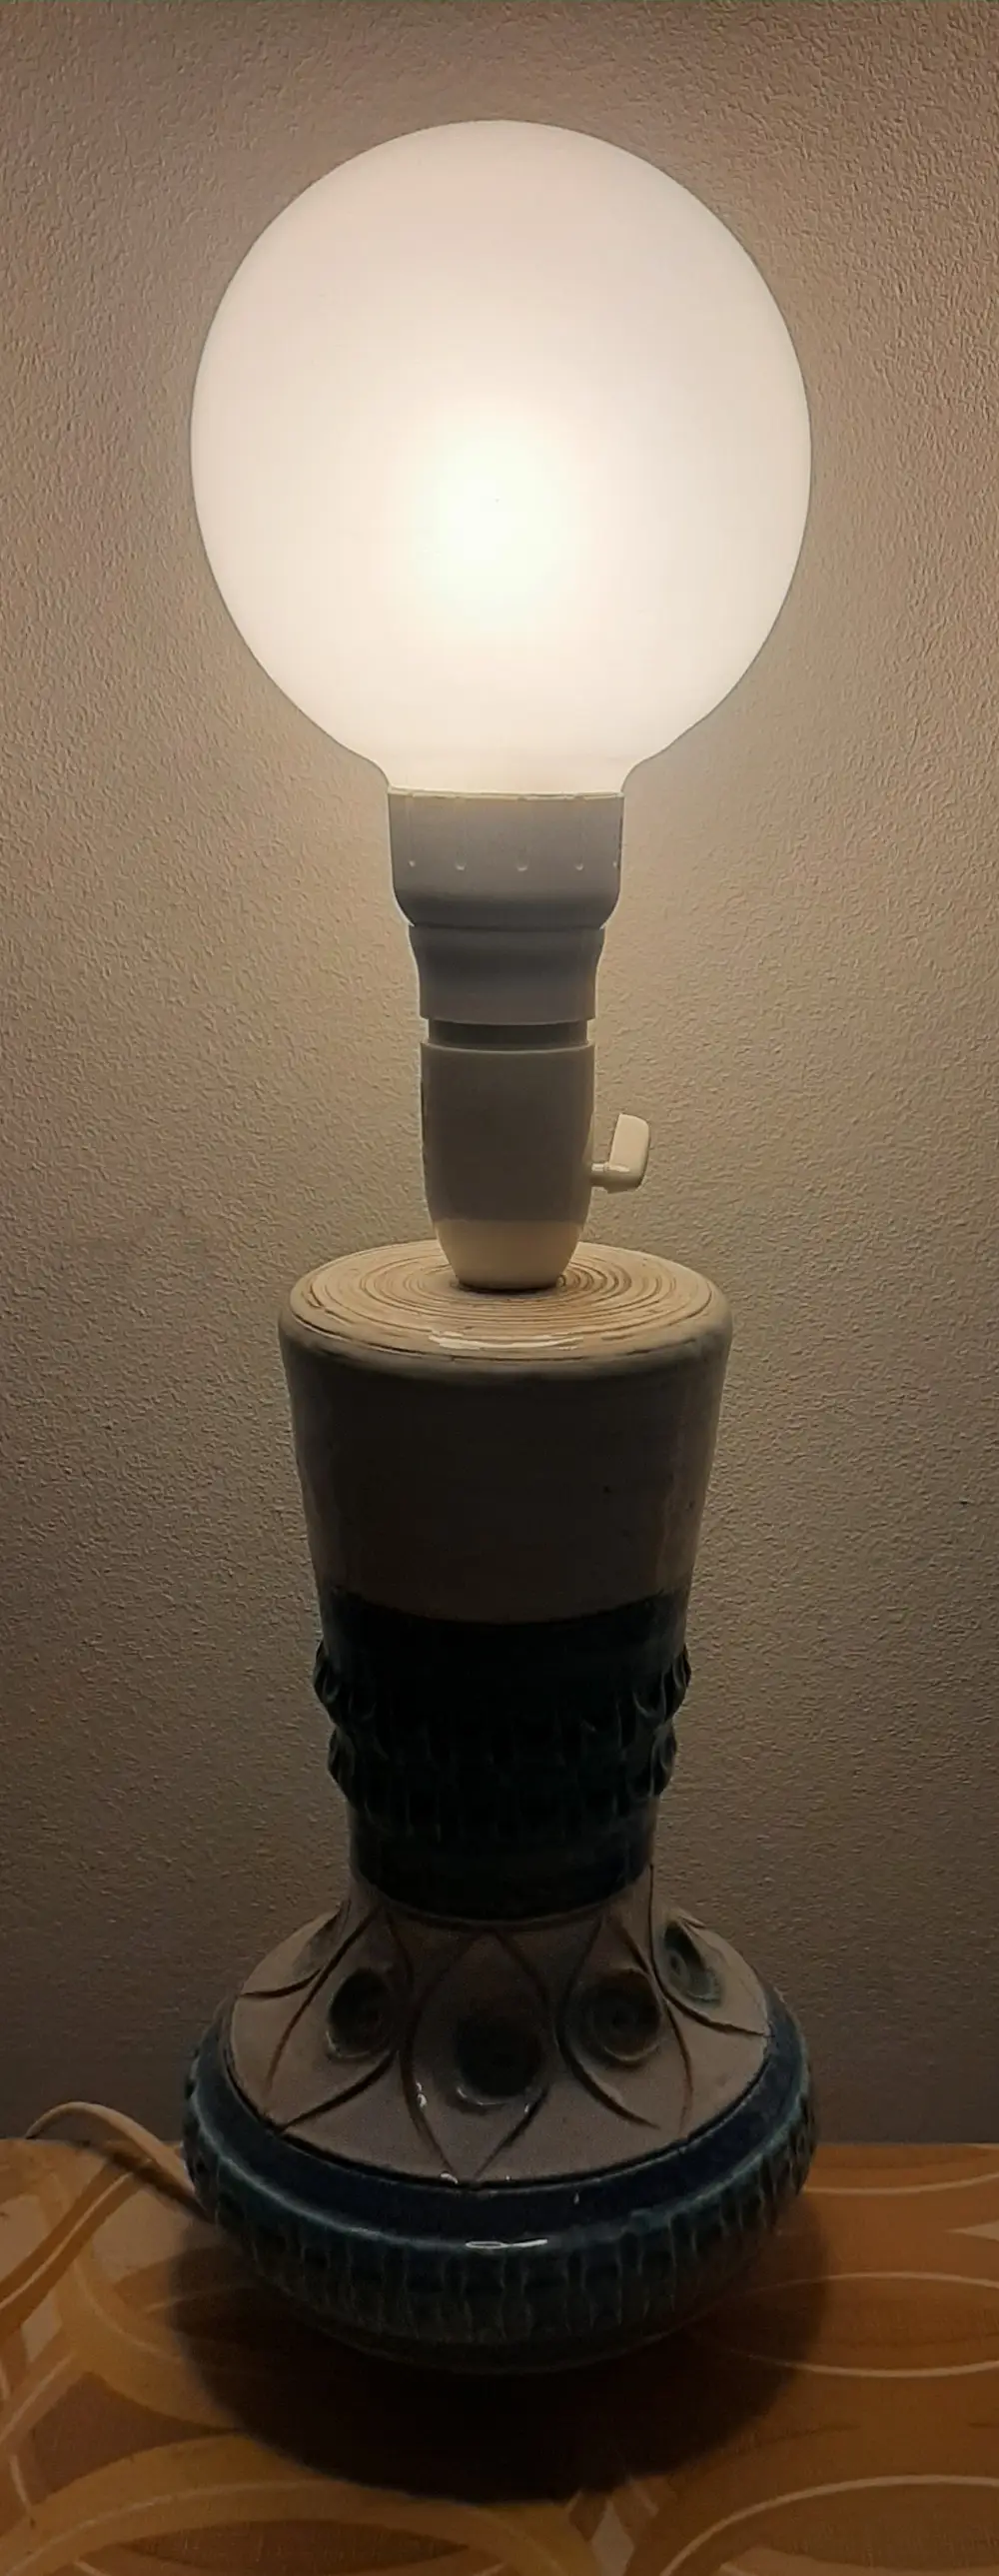 Retro Keramik bordlampe